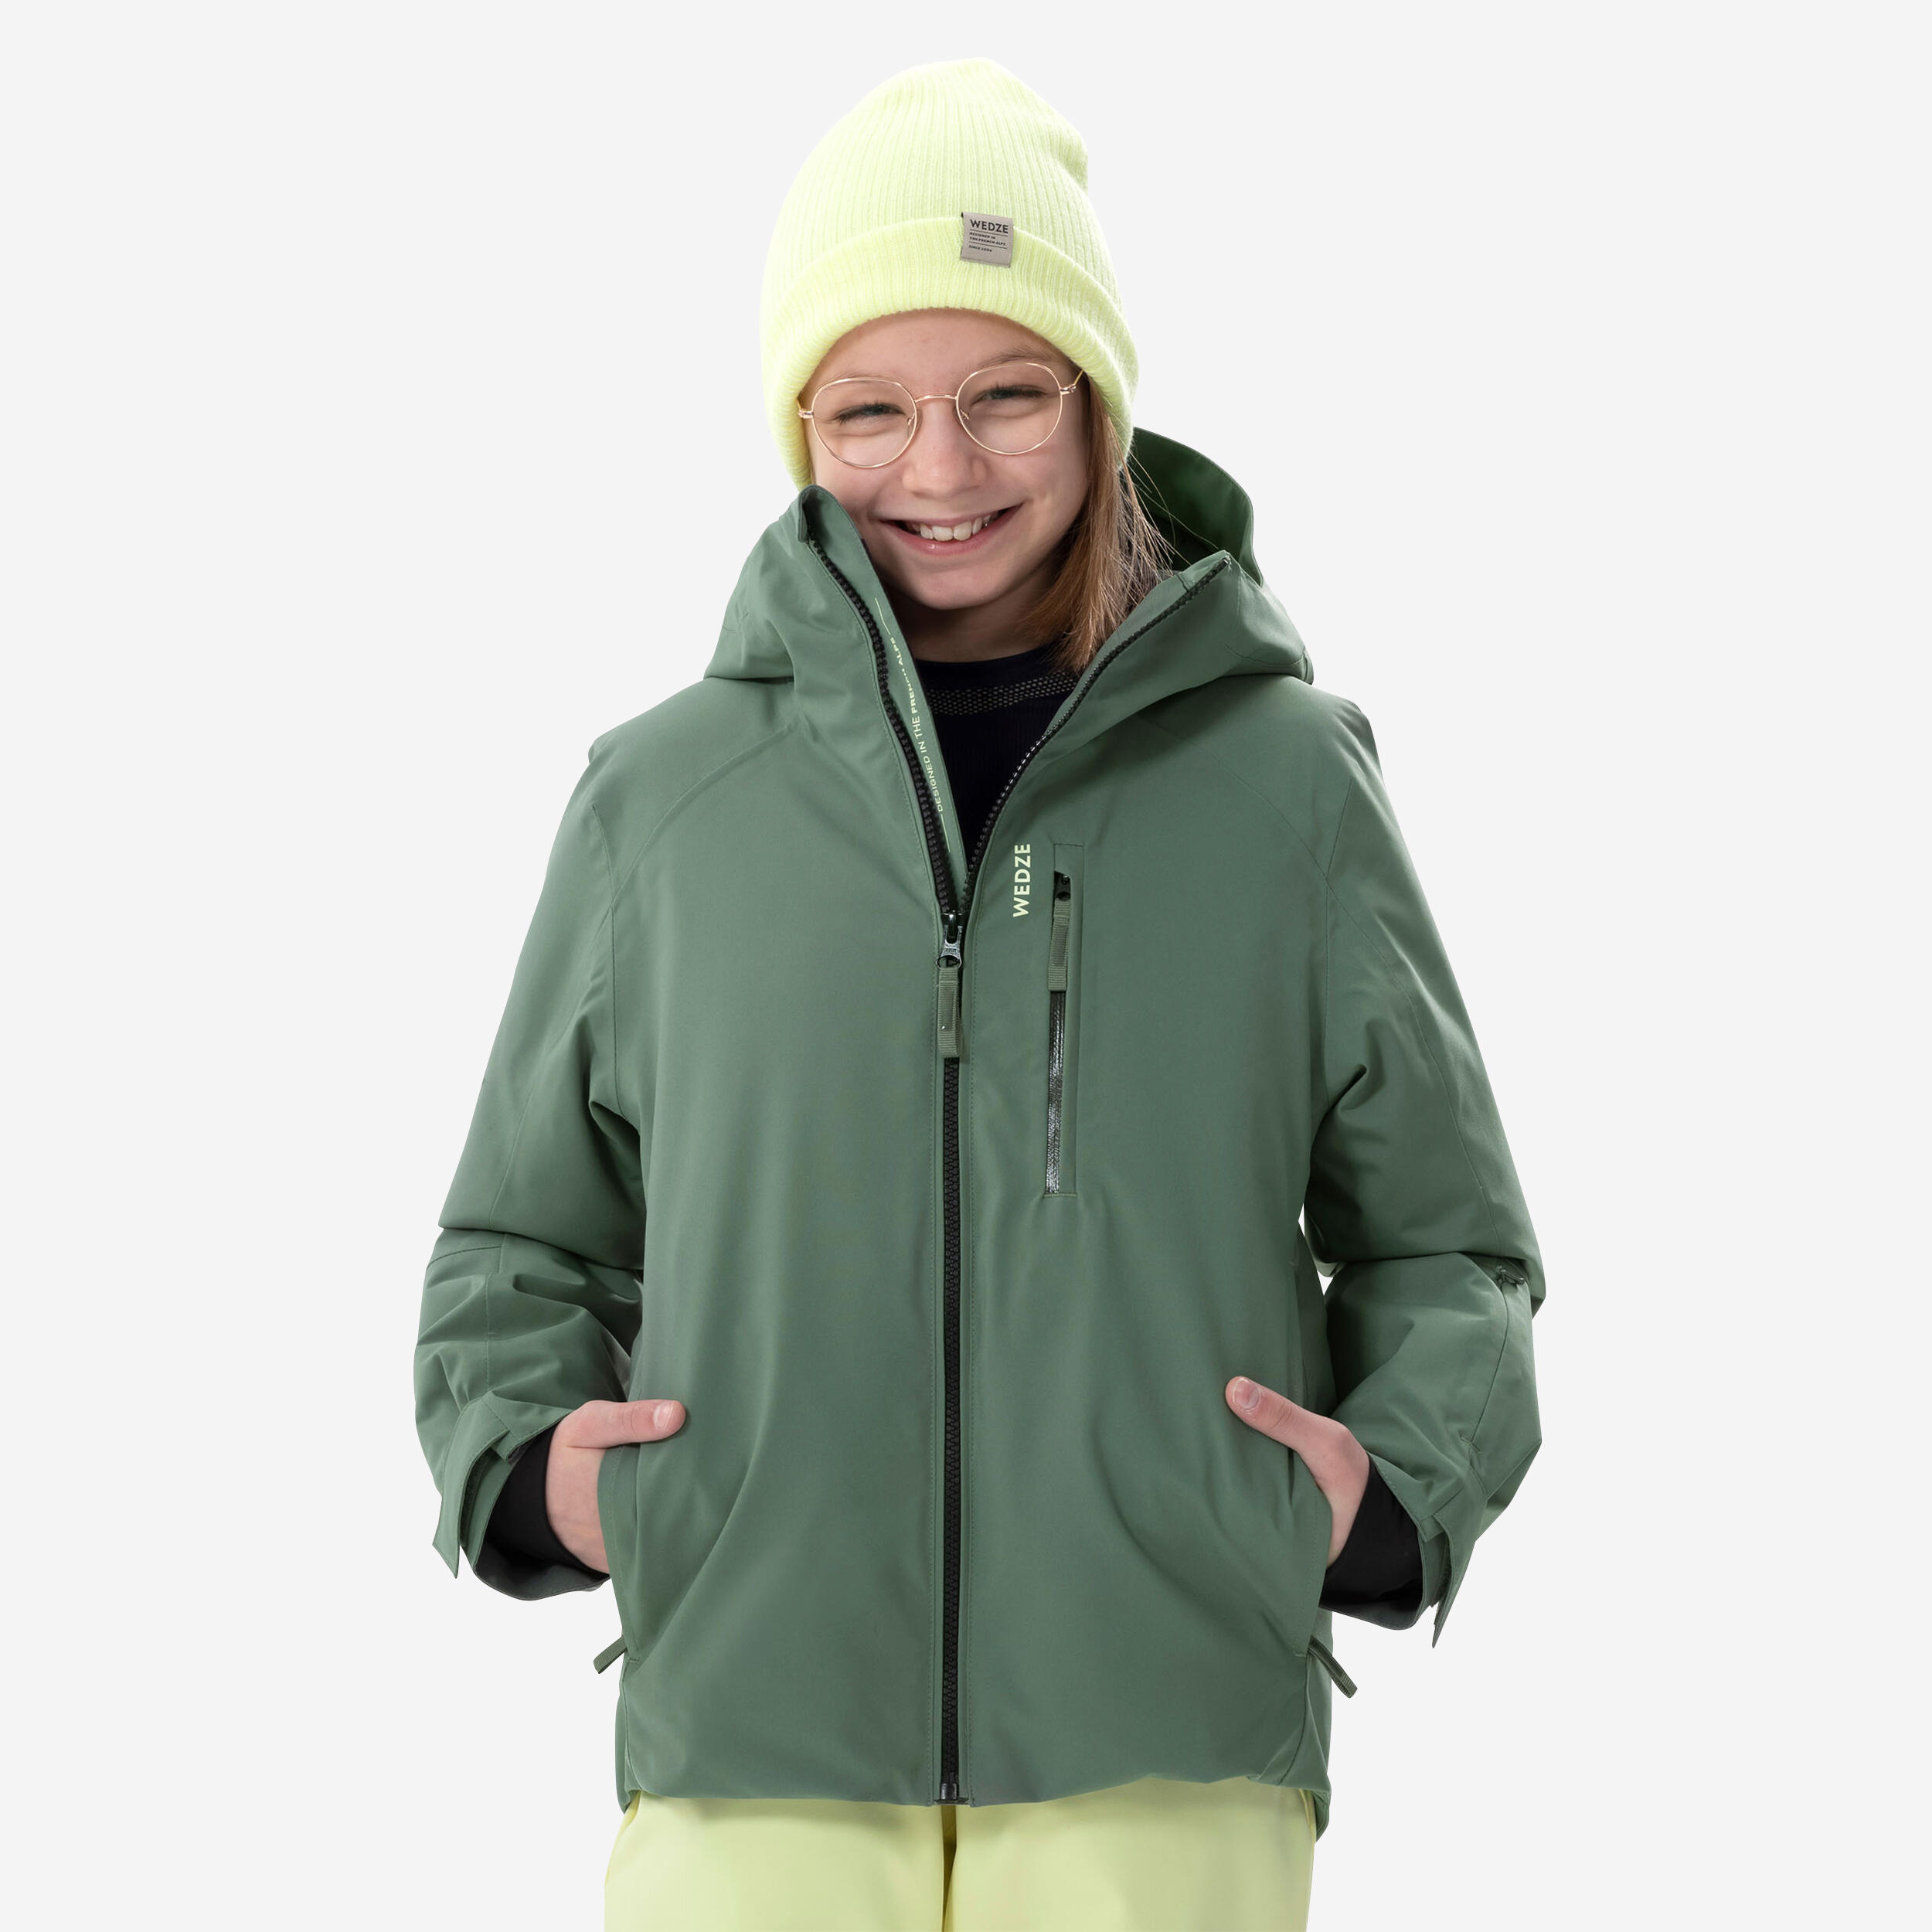 Kids’ Warm and Waterproof Ski Jacket 550 - Green 1/13